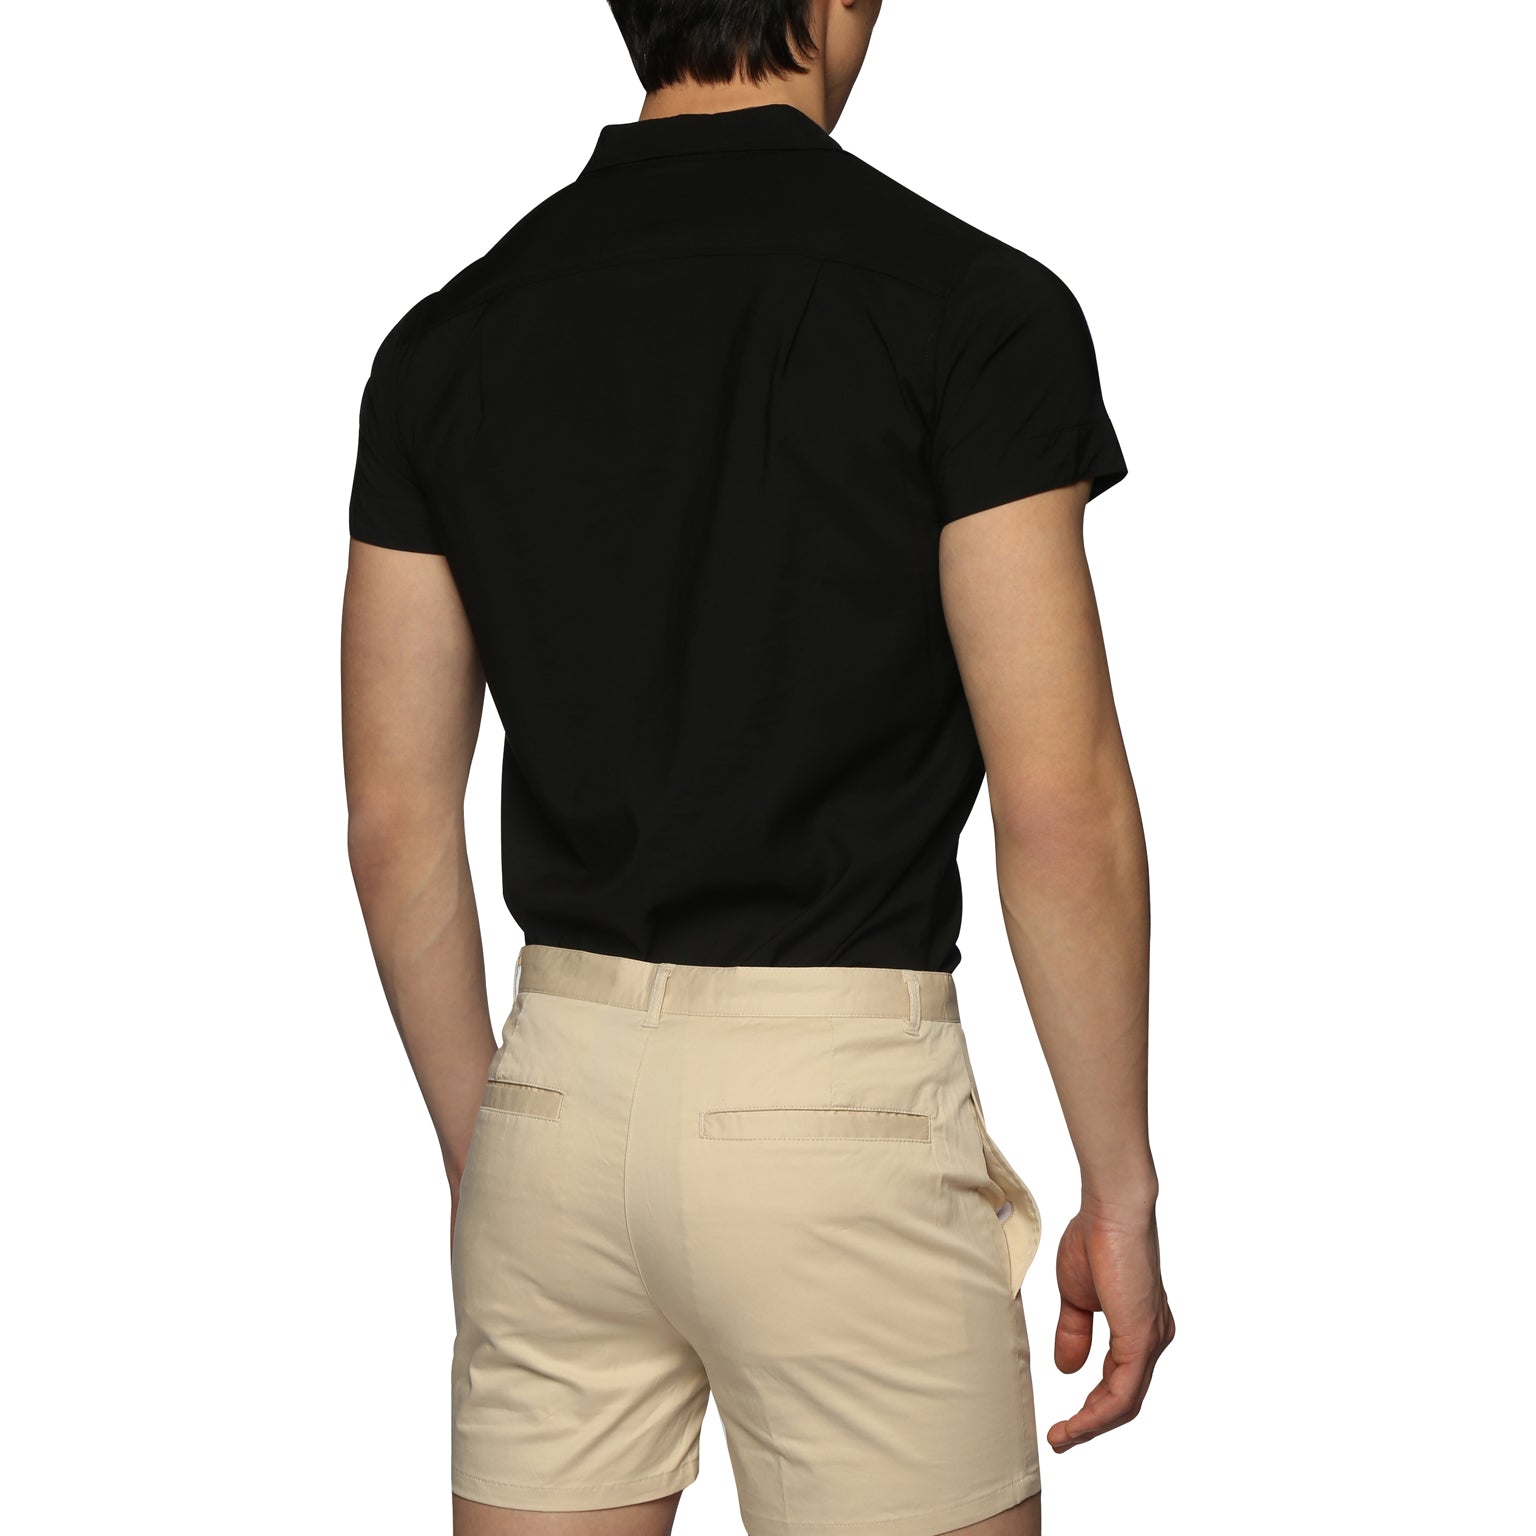 SPRING '24- Black Stretch Rayon Bal Harbor Shirt